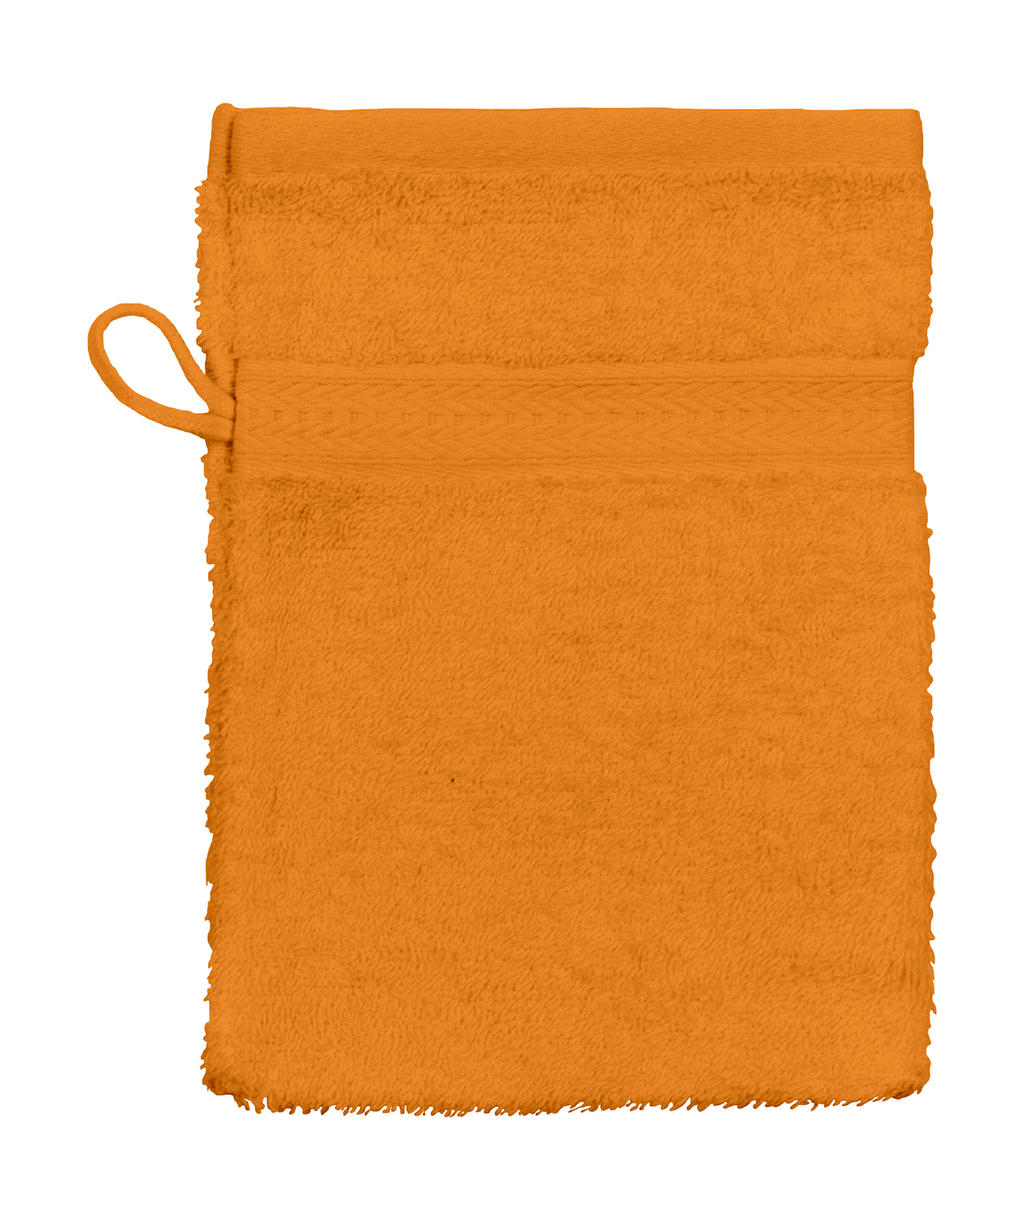  Rhine Wash Glove 16x22 cm in Farbe Bright Orange